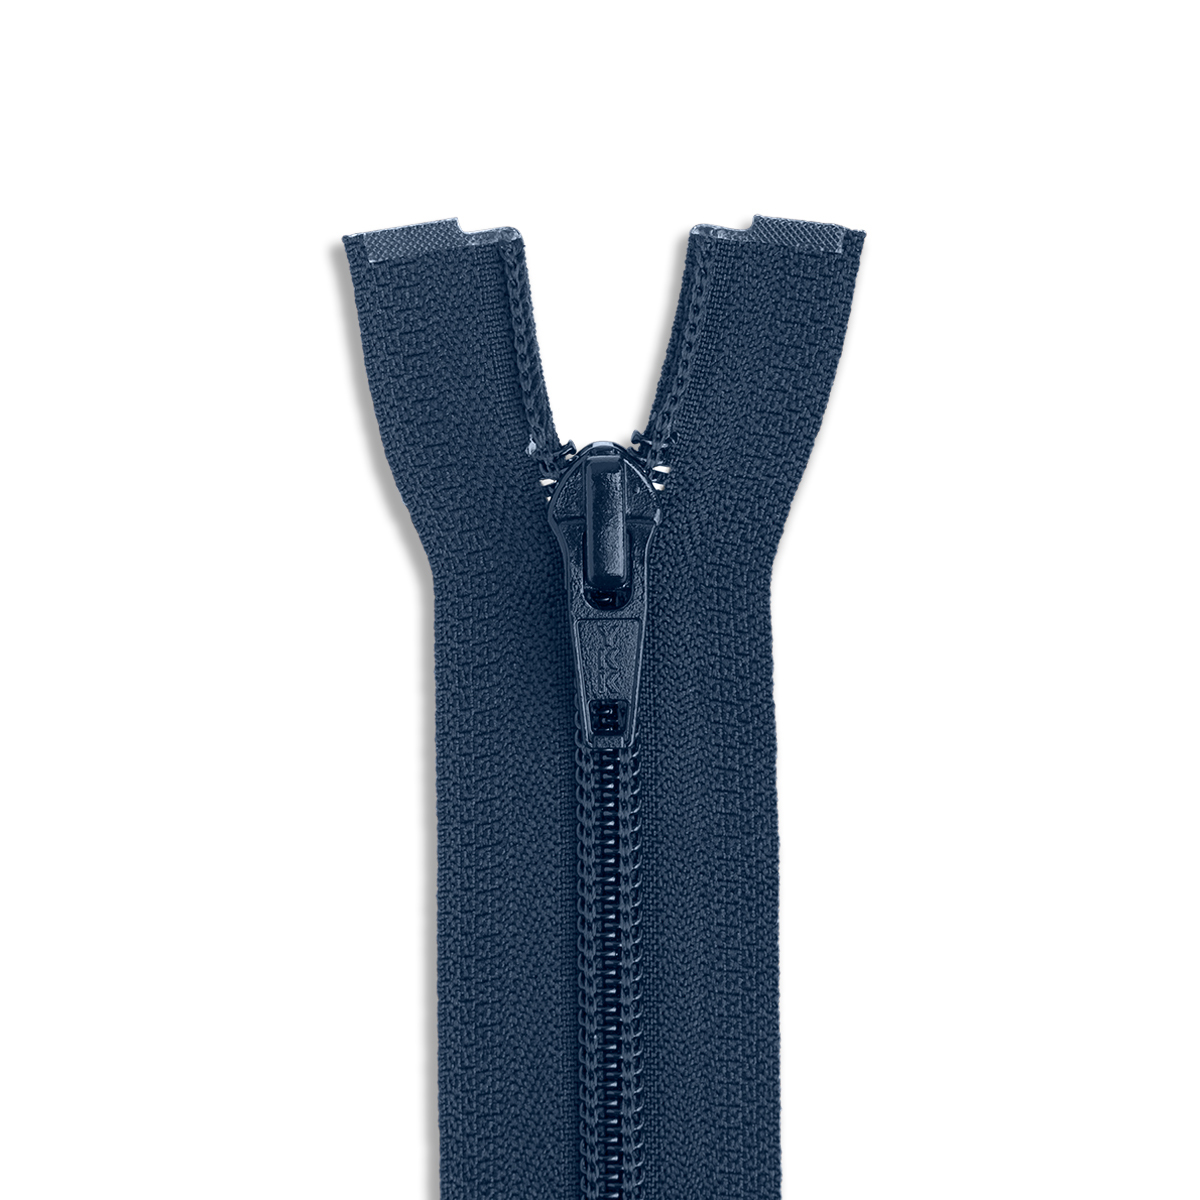 110 inch Sleeping Bag Separating Zipper ~ YKK #5 Nylon Coil Zipper ~ Dark Navy (3 Zippers / Pack), Blue